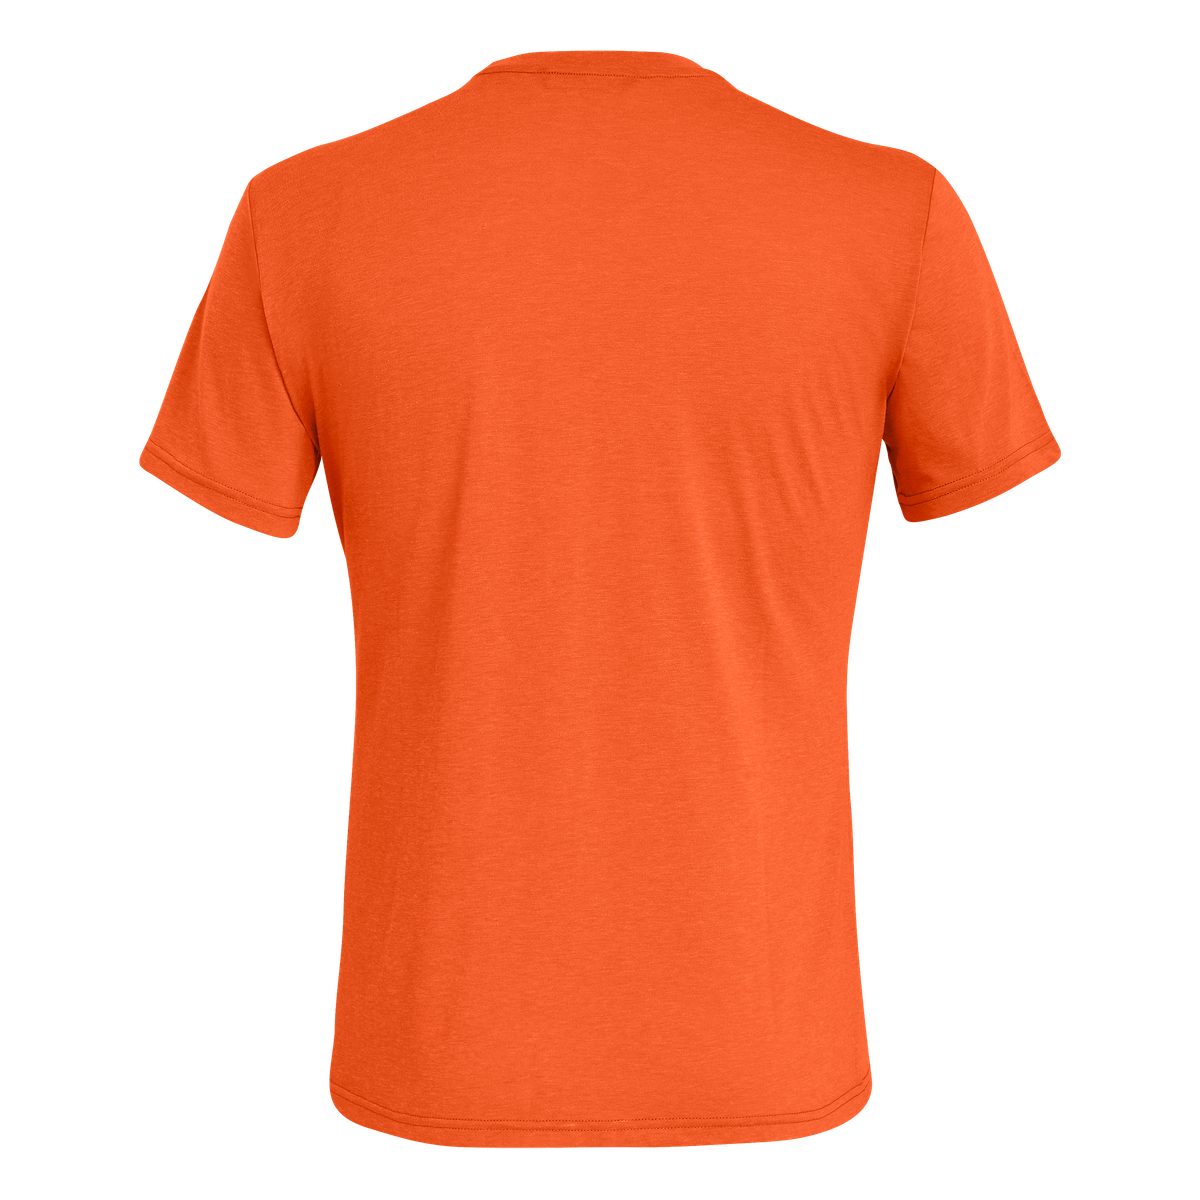 Salewa T-Shirt Solidlogo Dri-Release® orange (Funktionsshirt) - Herren 4156 T-Shirt Salewa red